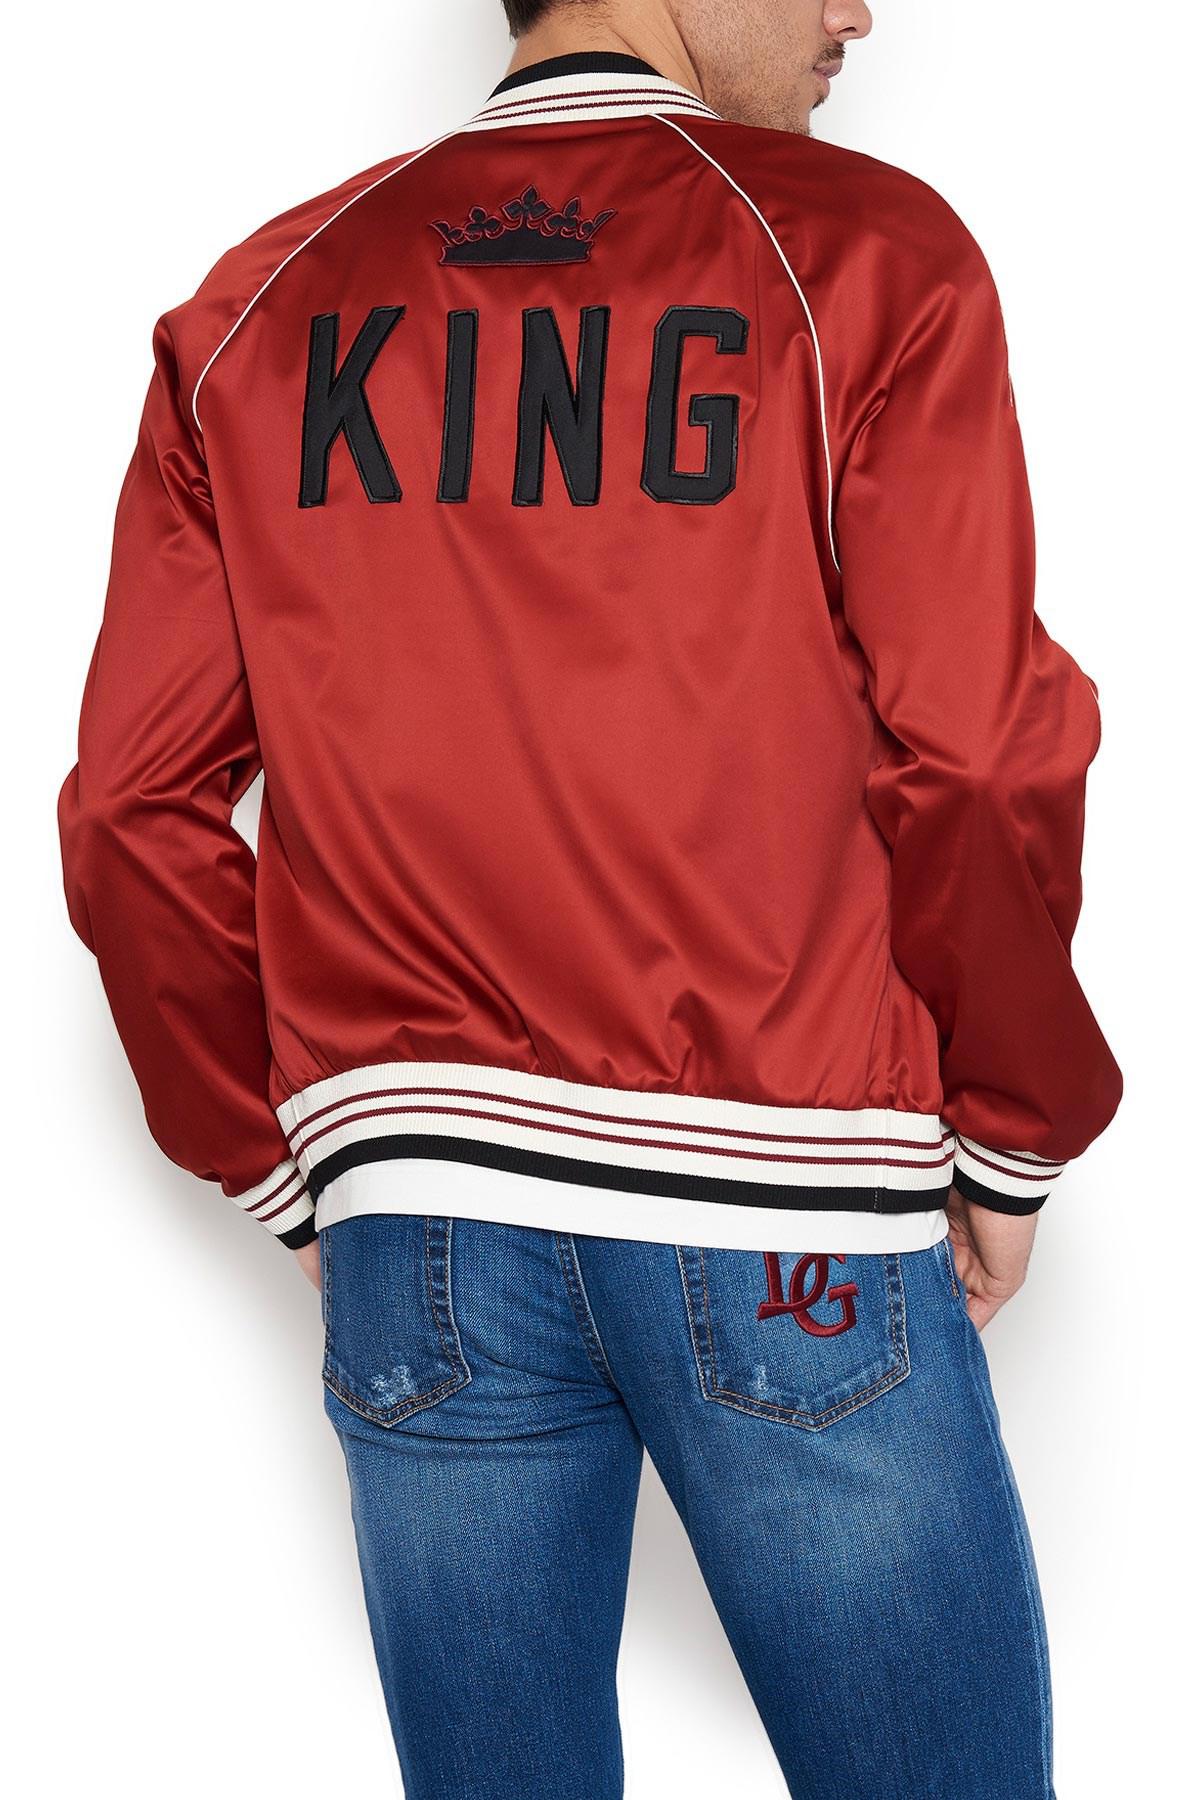 king d&g jacket